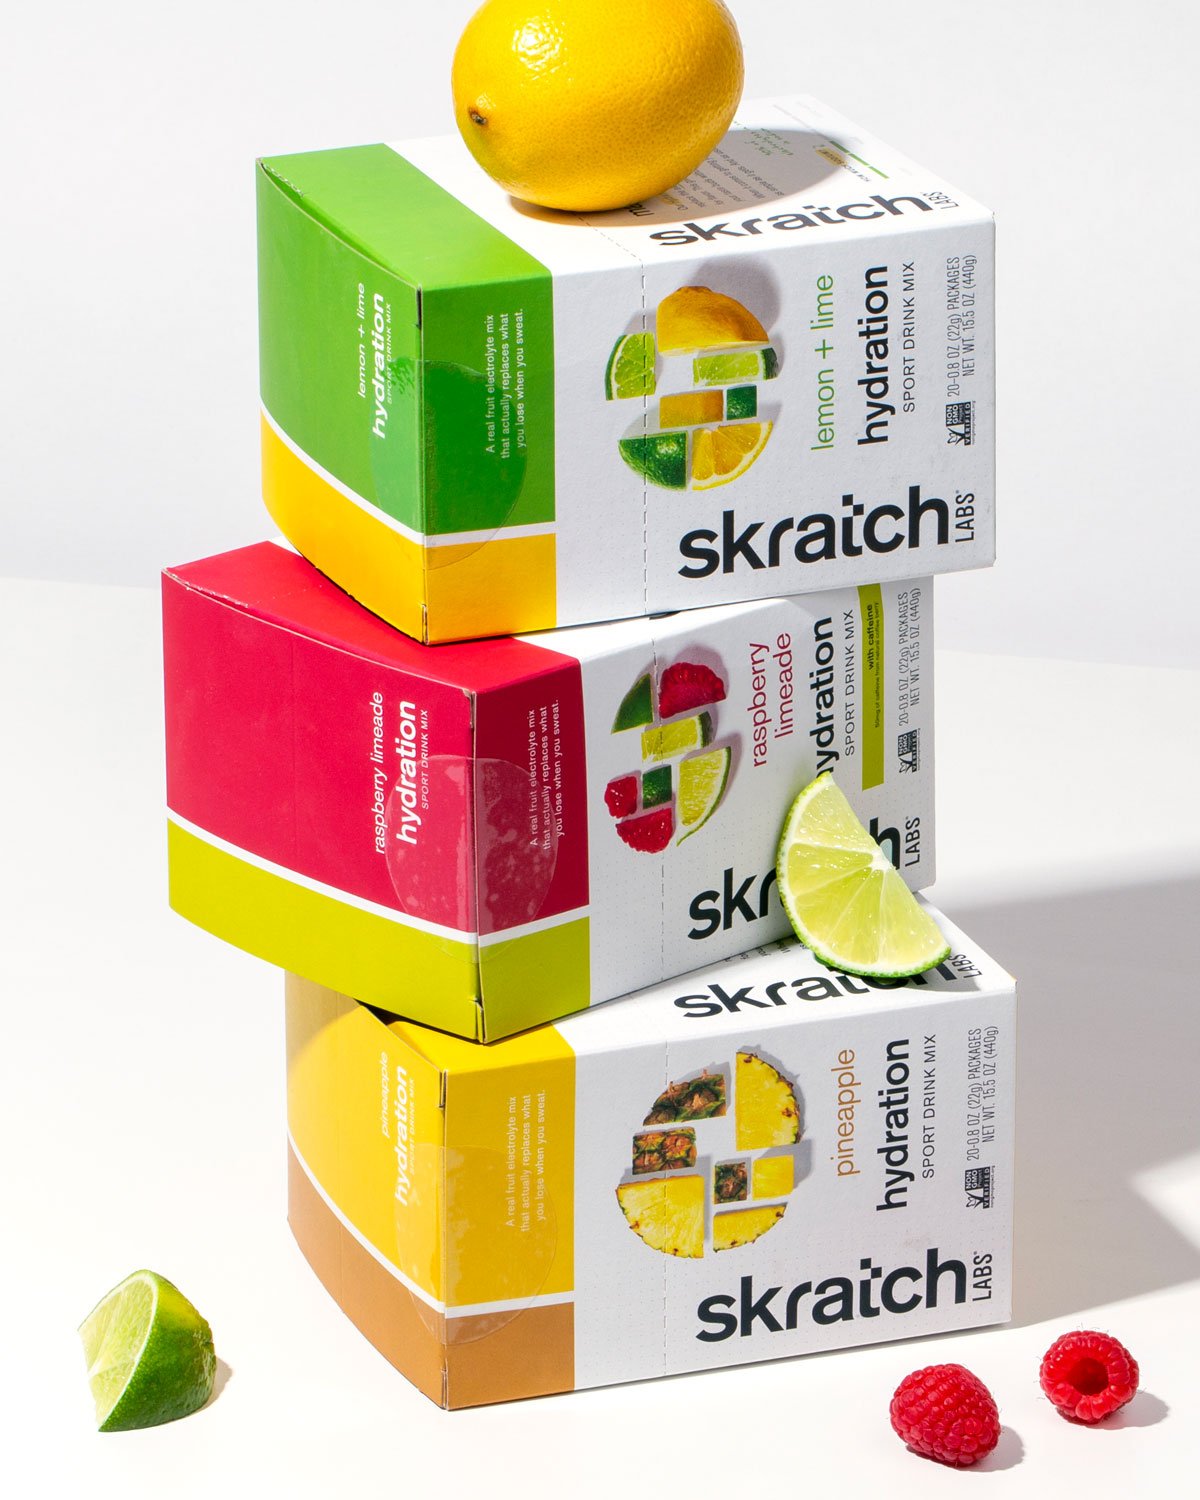 015-Skratch-Portfolio-Photography-4x5-BoxStack